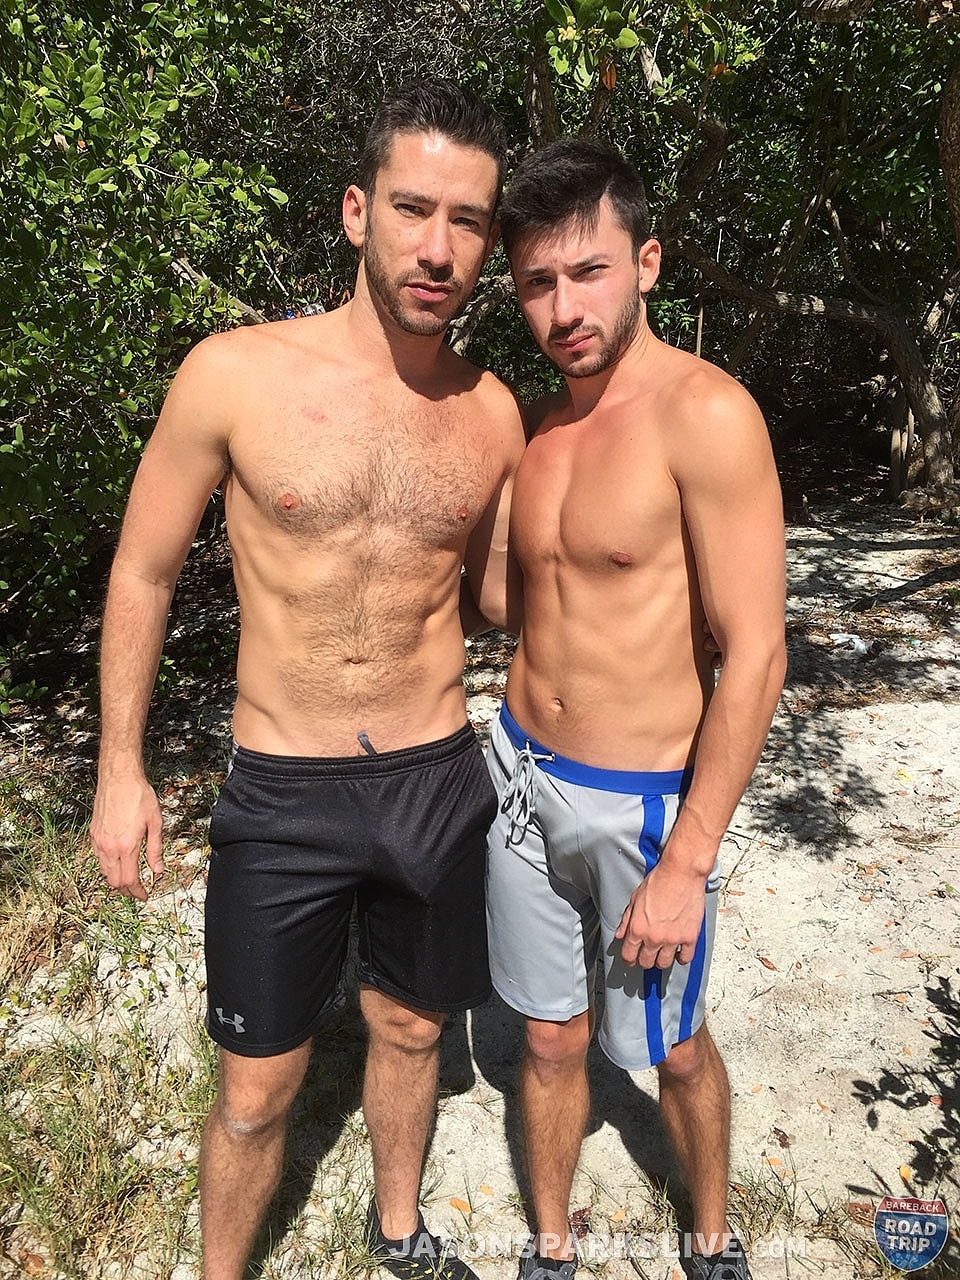 Sweet brunette gay dudes Owen Powers and Scott DeMarco bang hard outdoors